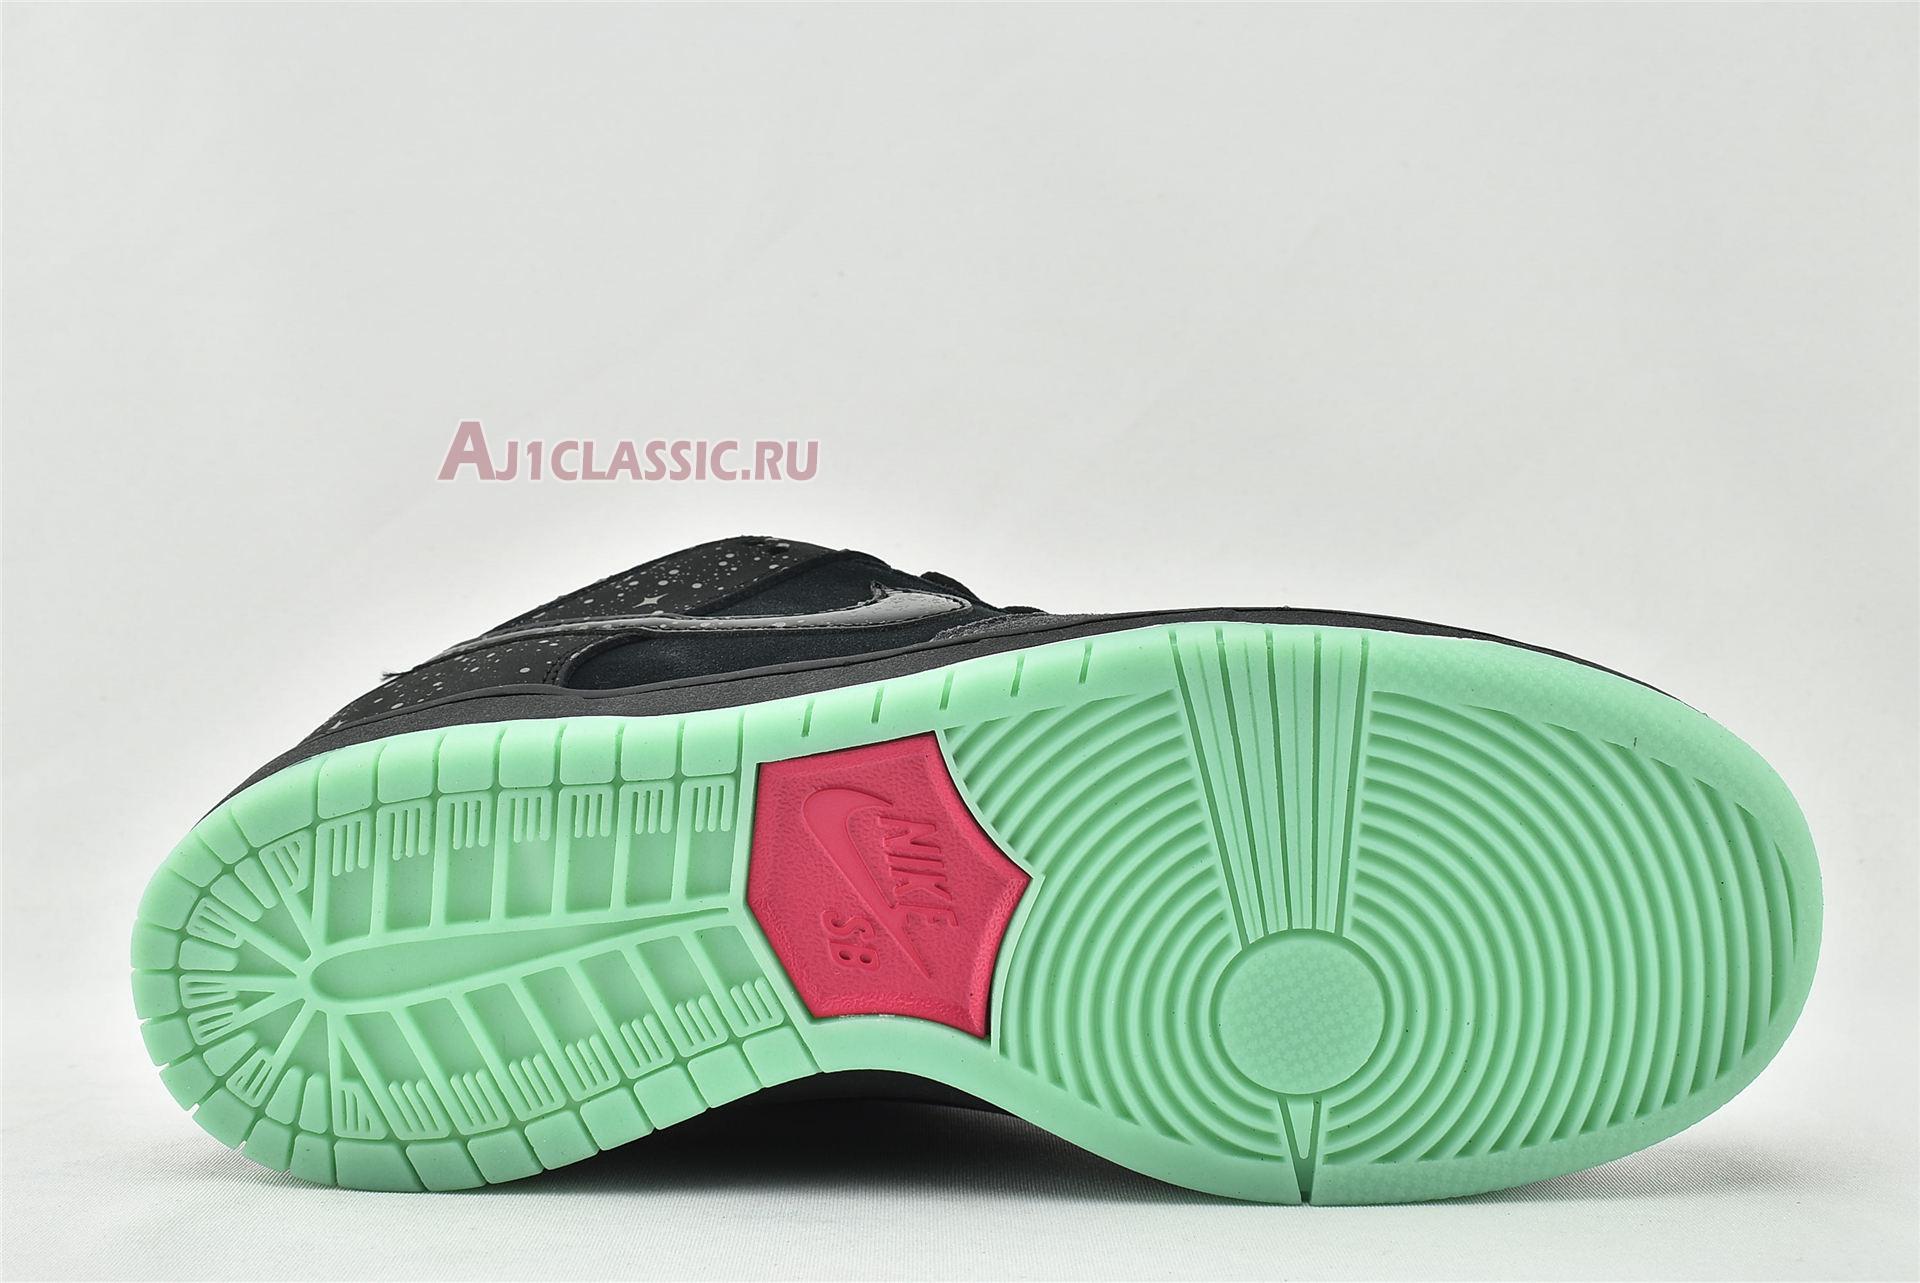 Premier x Nike Dunk Low Premium SB AE QS "Northern Lights" 724183-063